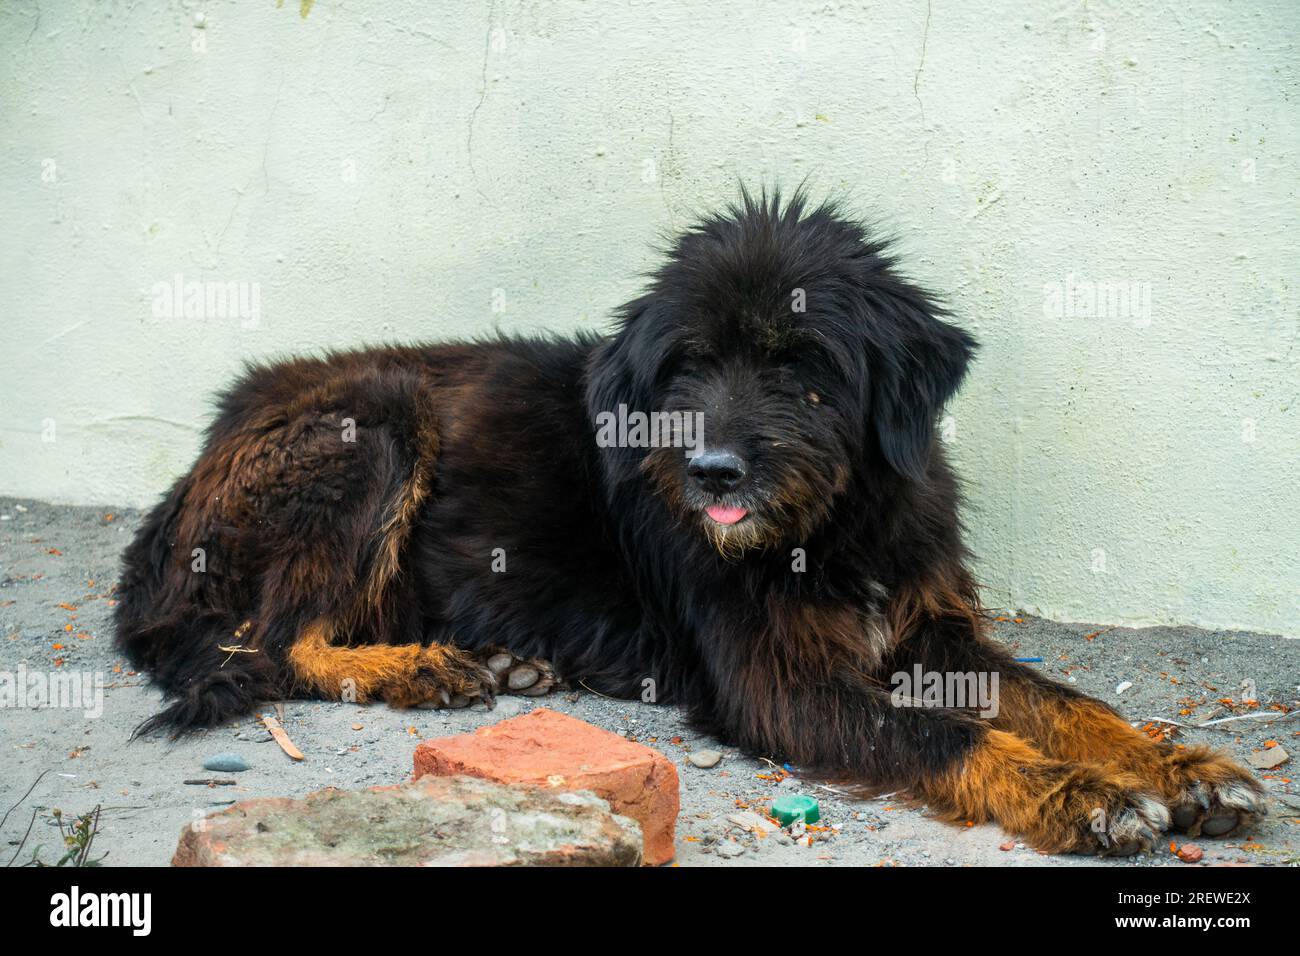 Fierce Himalayan Guard Dog, a blend of black and brown fur. Majestic Himalayan Mastiff, vigilant protector. Stock Photo